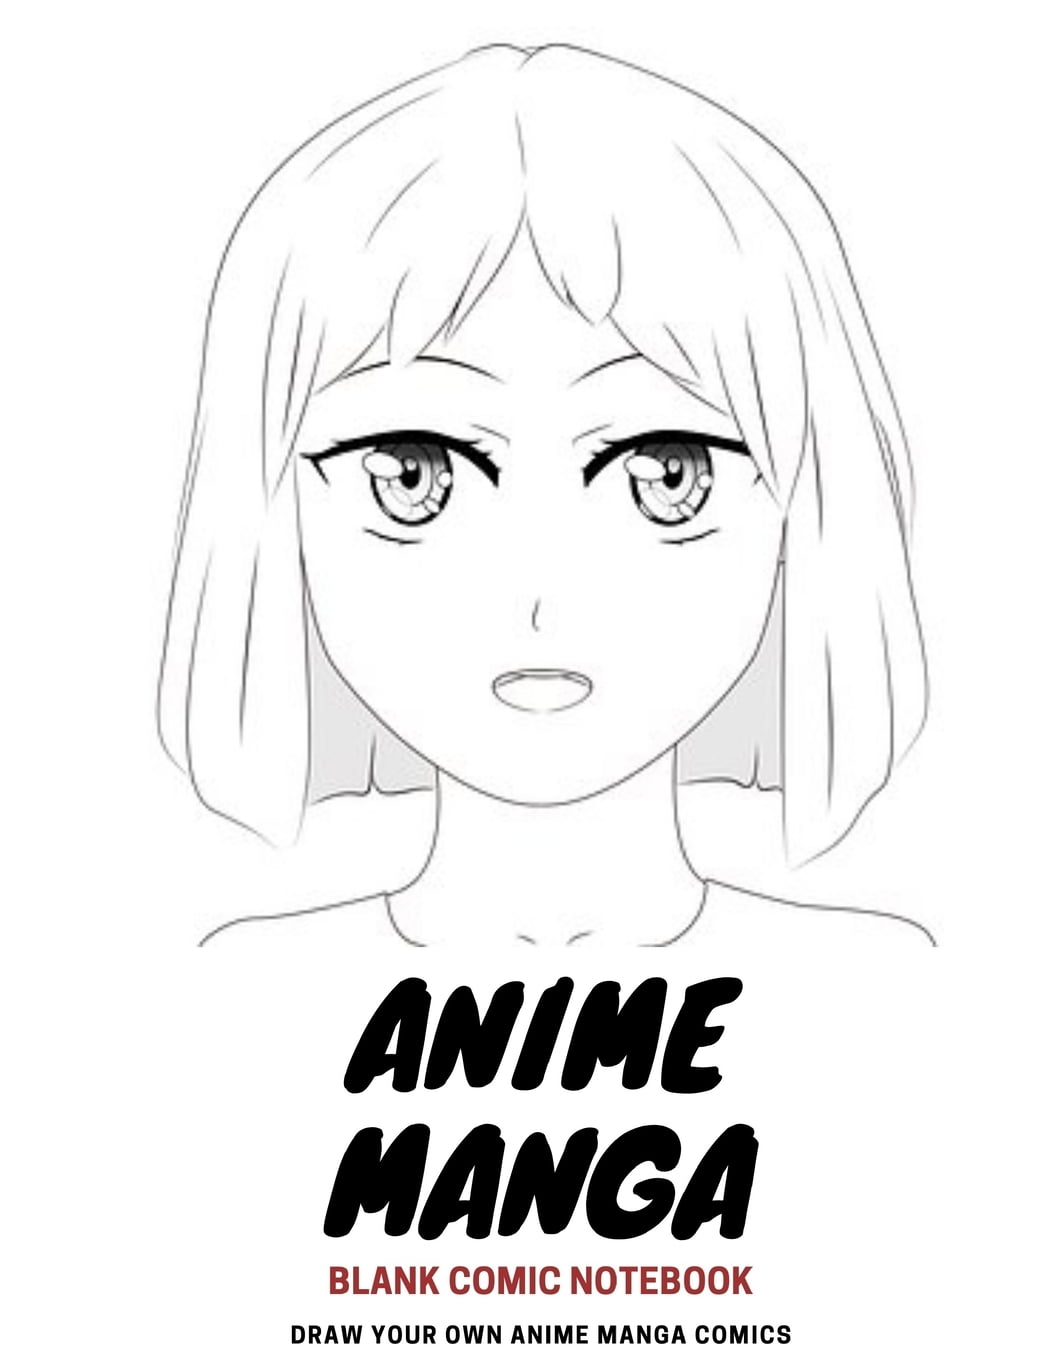 Your manga and anime collection, Page 5